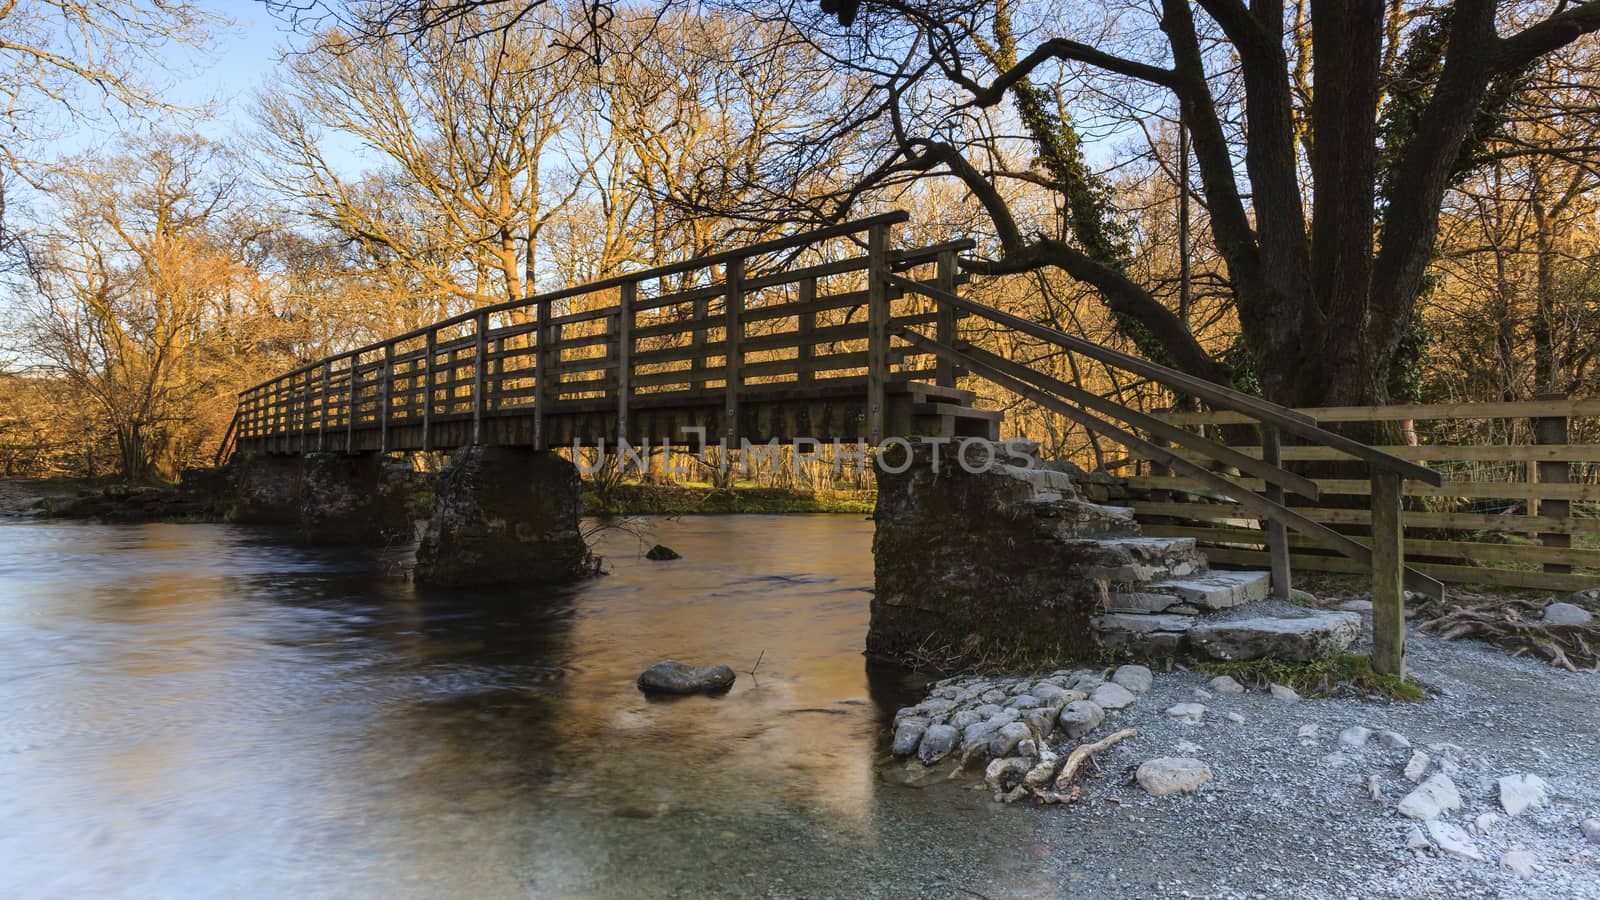 Wooden Footbridge by ATGImages